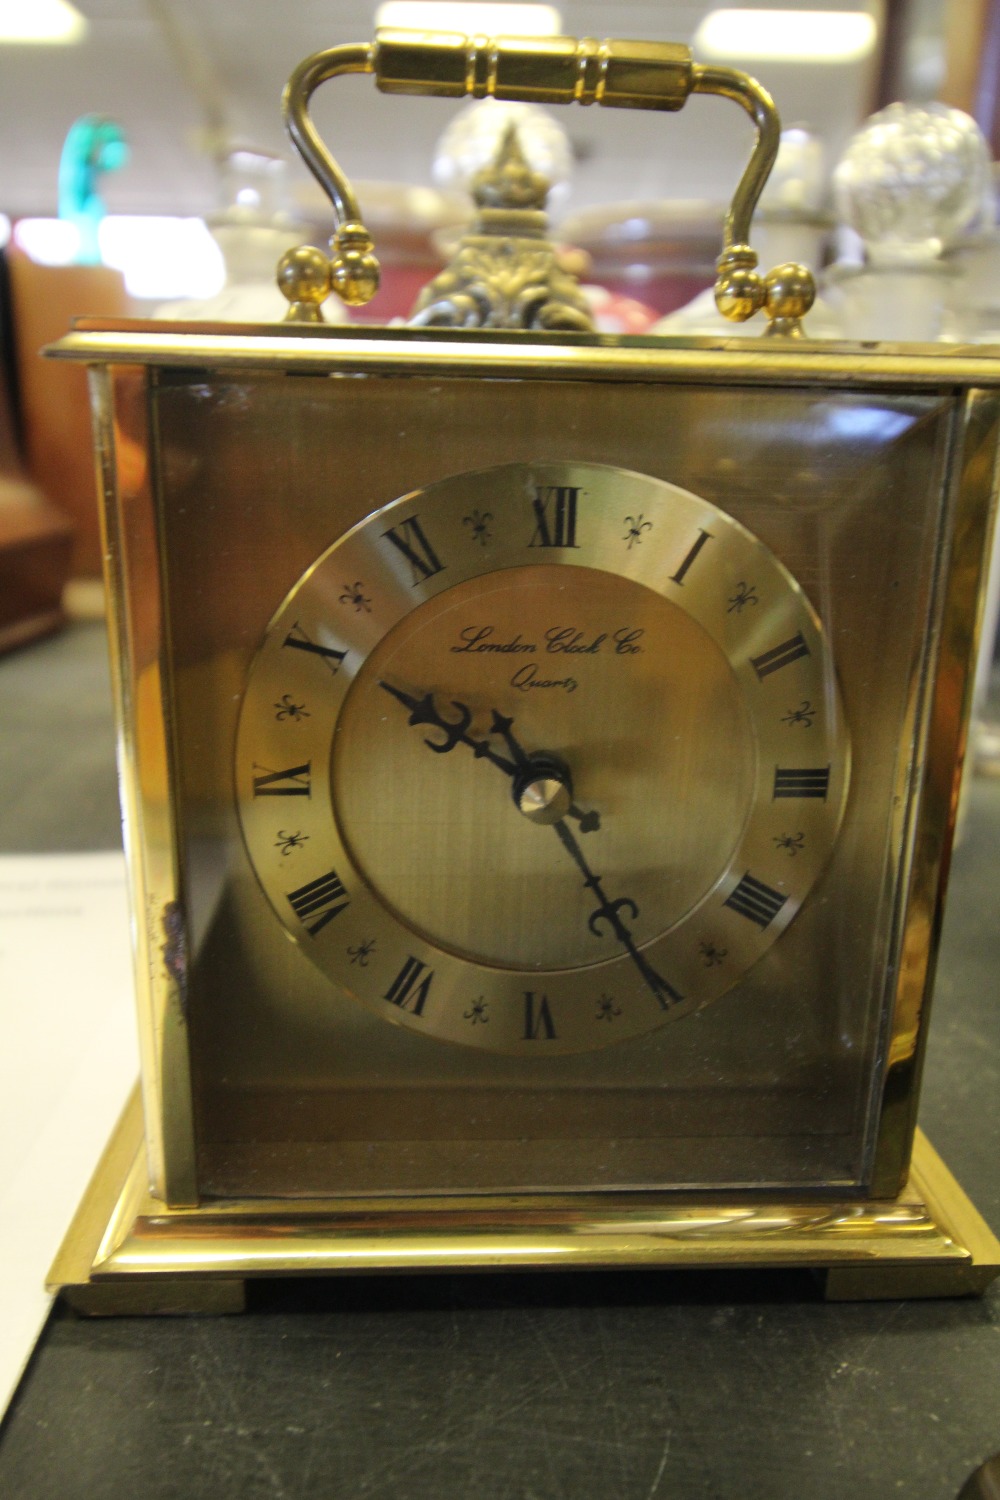 Splendex Mantle Clock, London Clock Company Quartz & Schatz Mantle Clock - Image 3 of 4